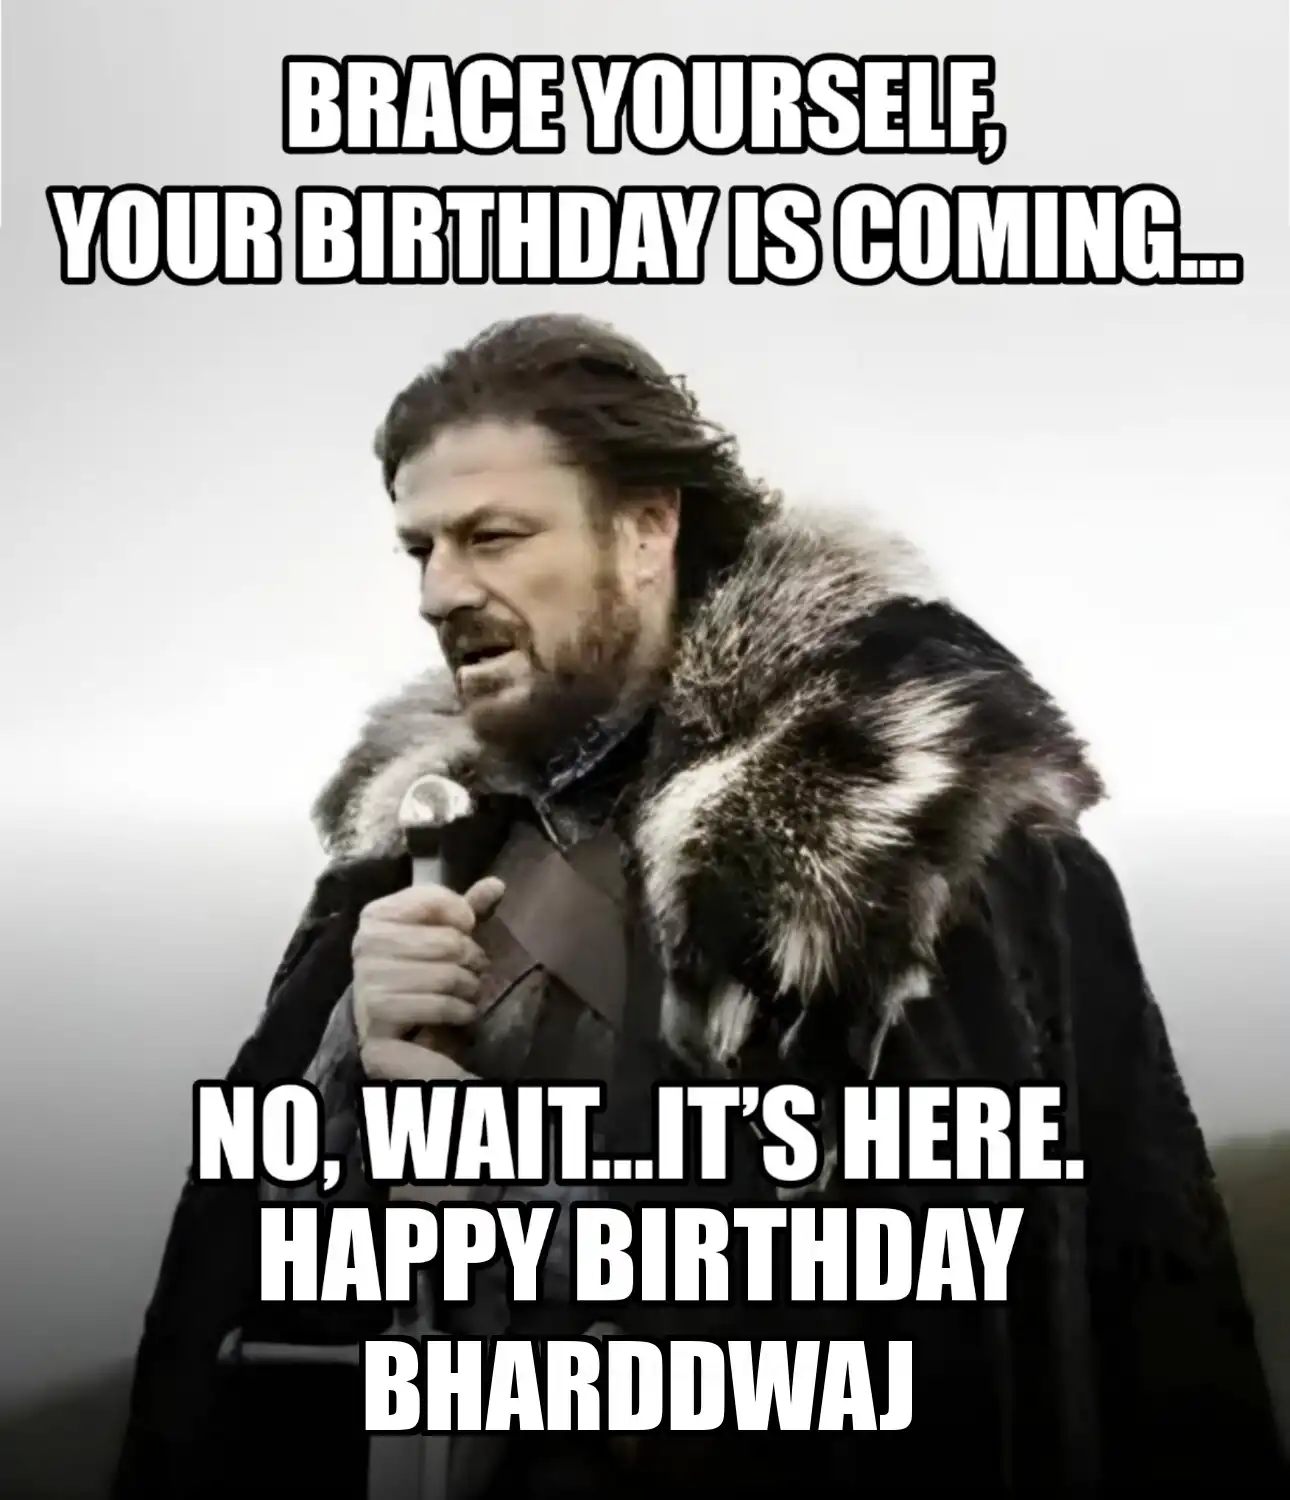 Happy Birthday Bharddwaj Brace Yourself Your Birthday Is Coming Meme